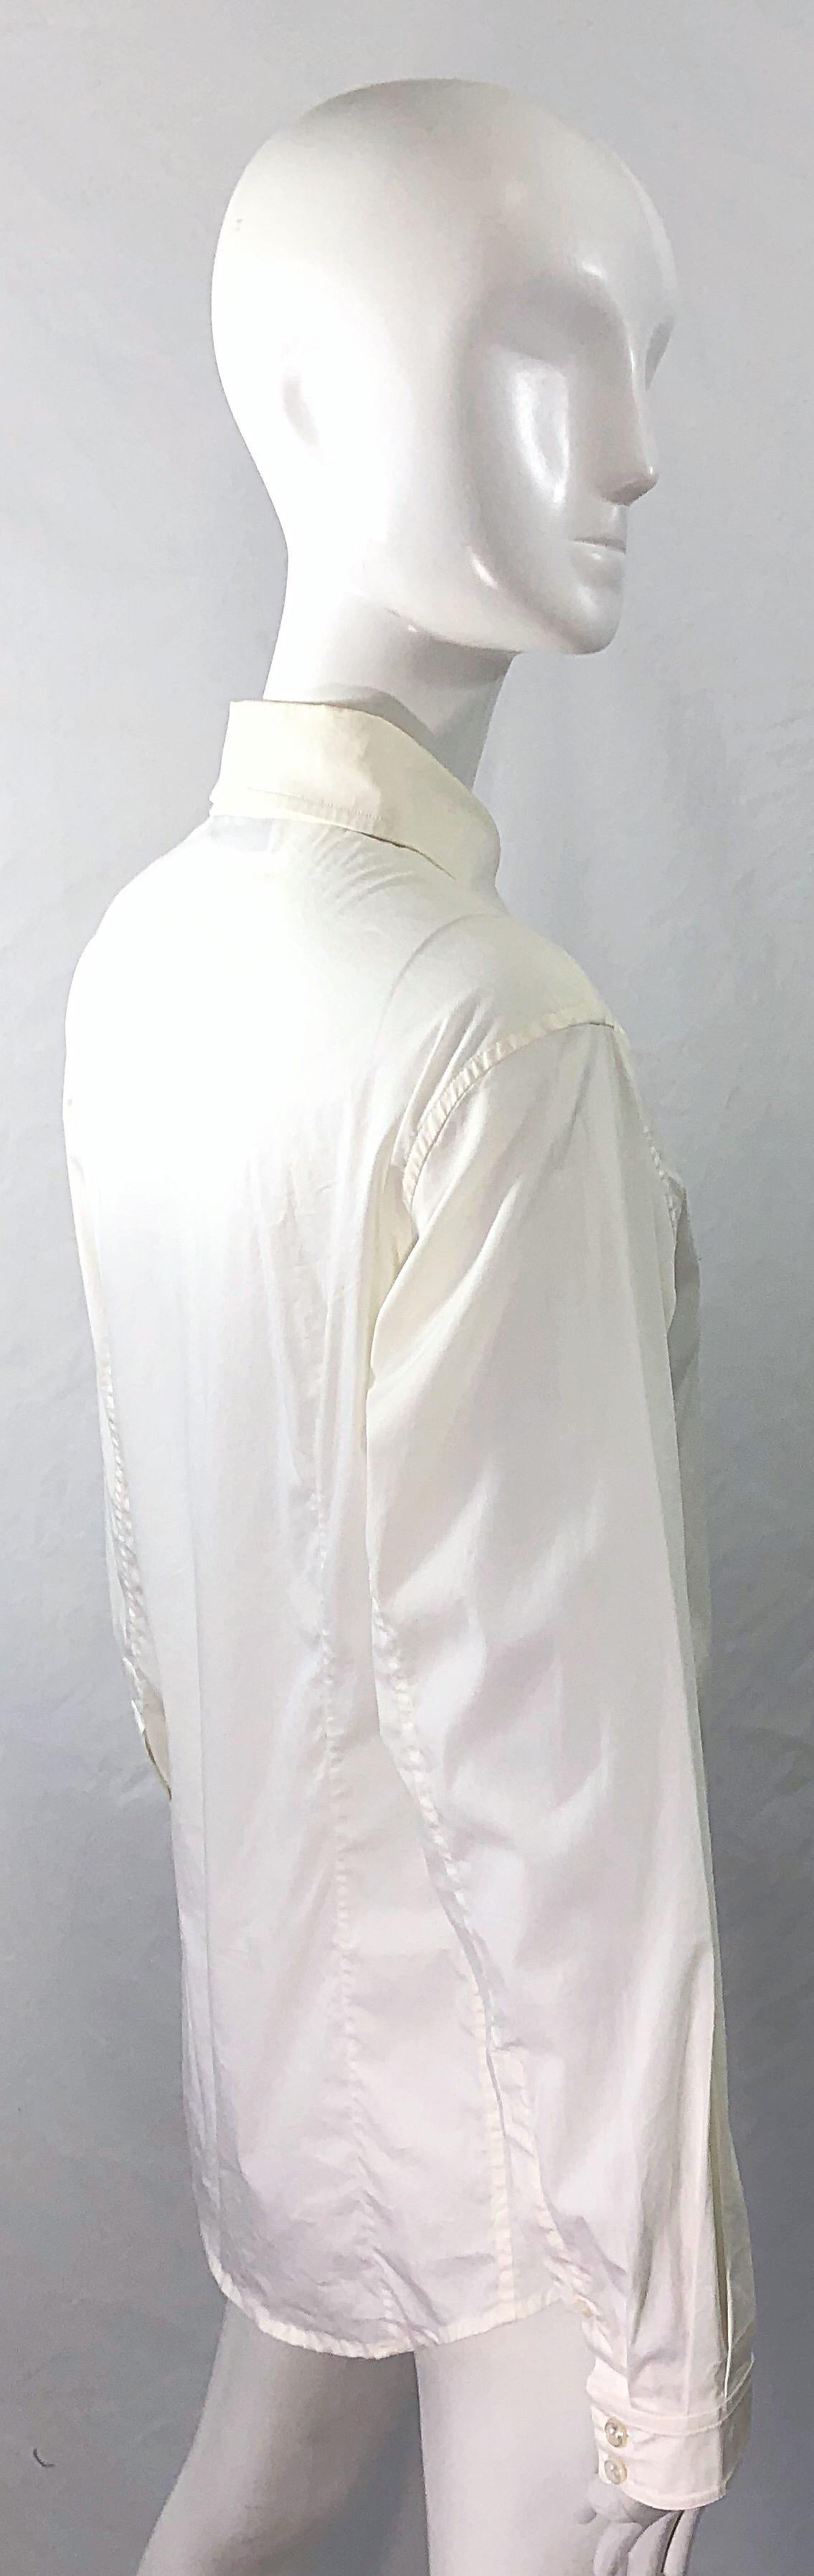 Women's Yves Saint Laurent by Tom Ford YSL Size 40 / 8 Ivory White Tuxedo Blouse Shirt For Sale